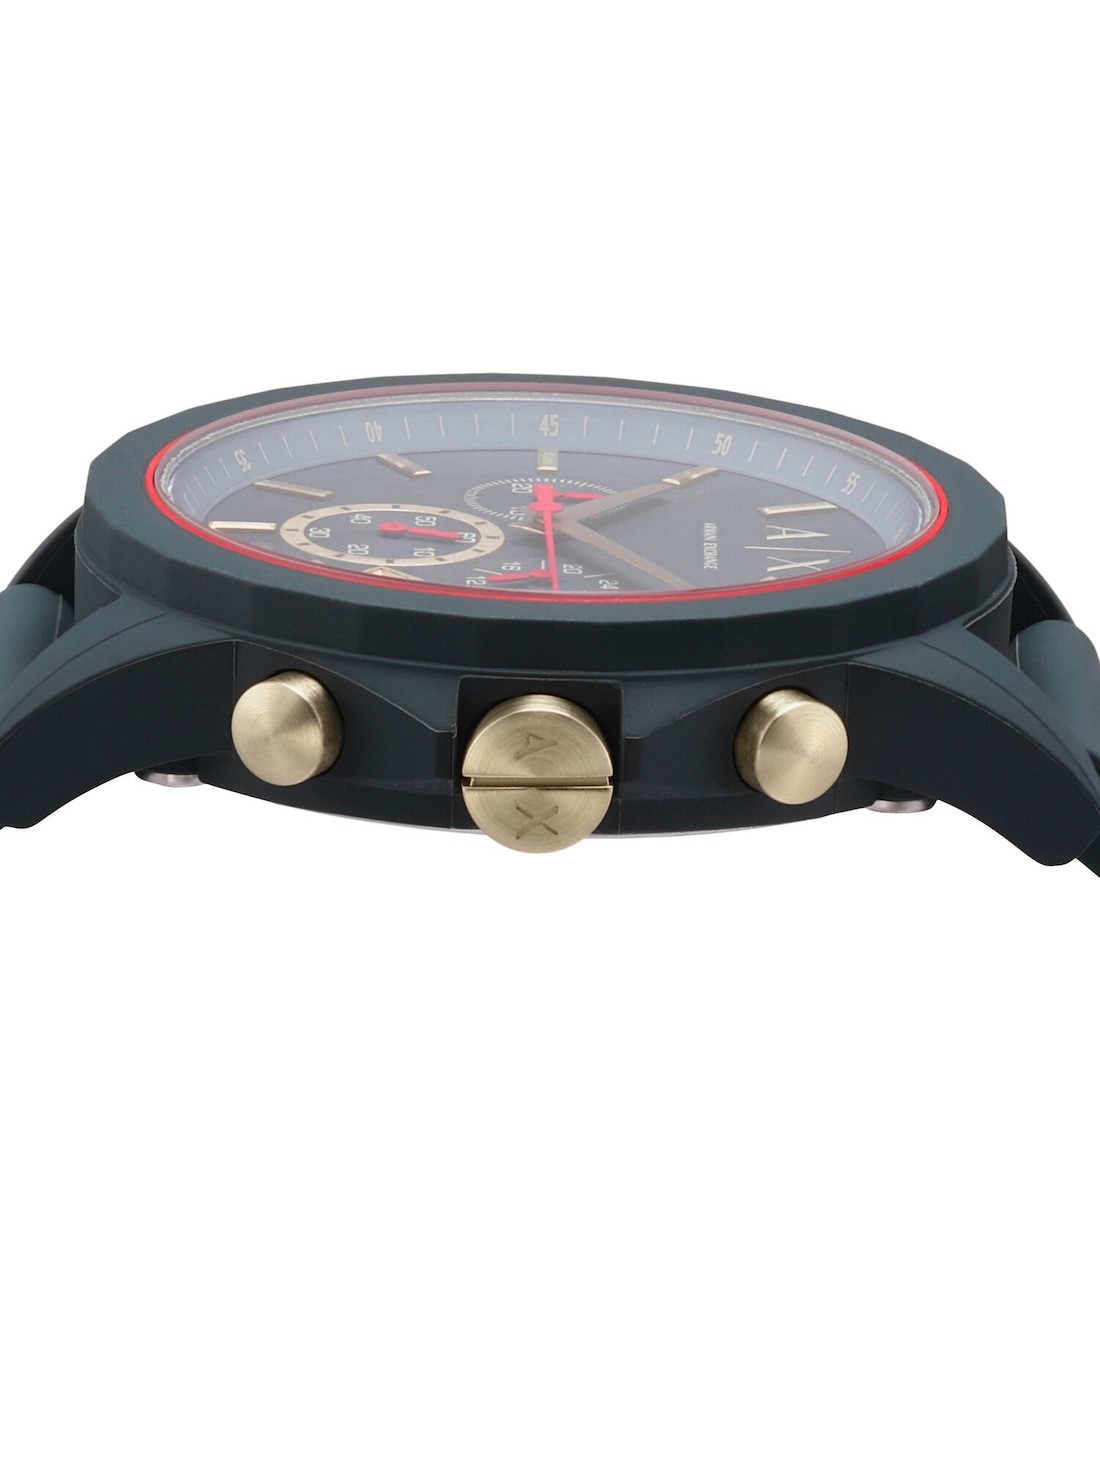 Armani Exchange AX1335 Blue Watch